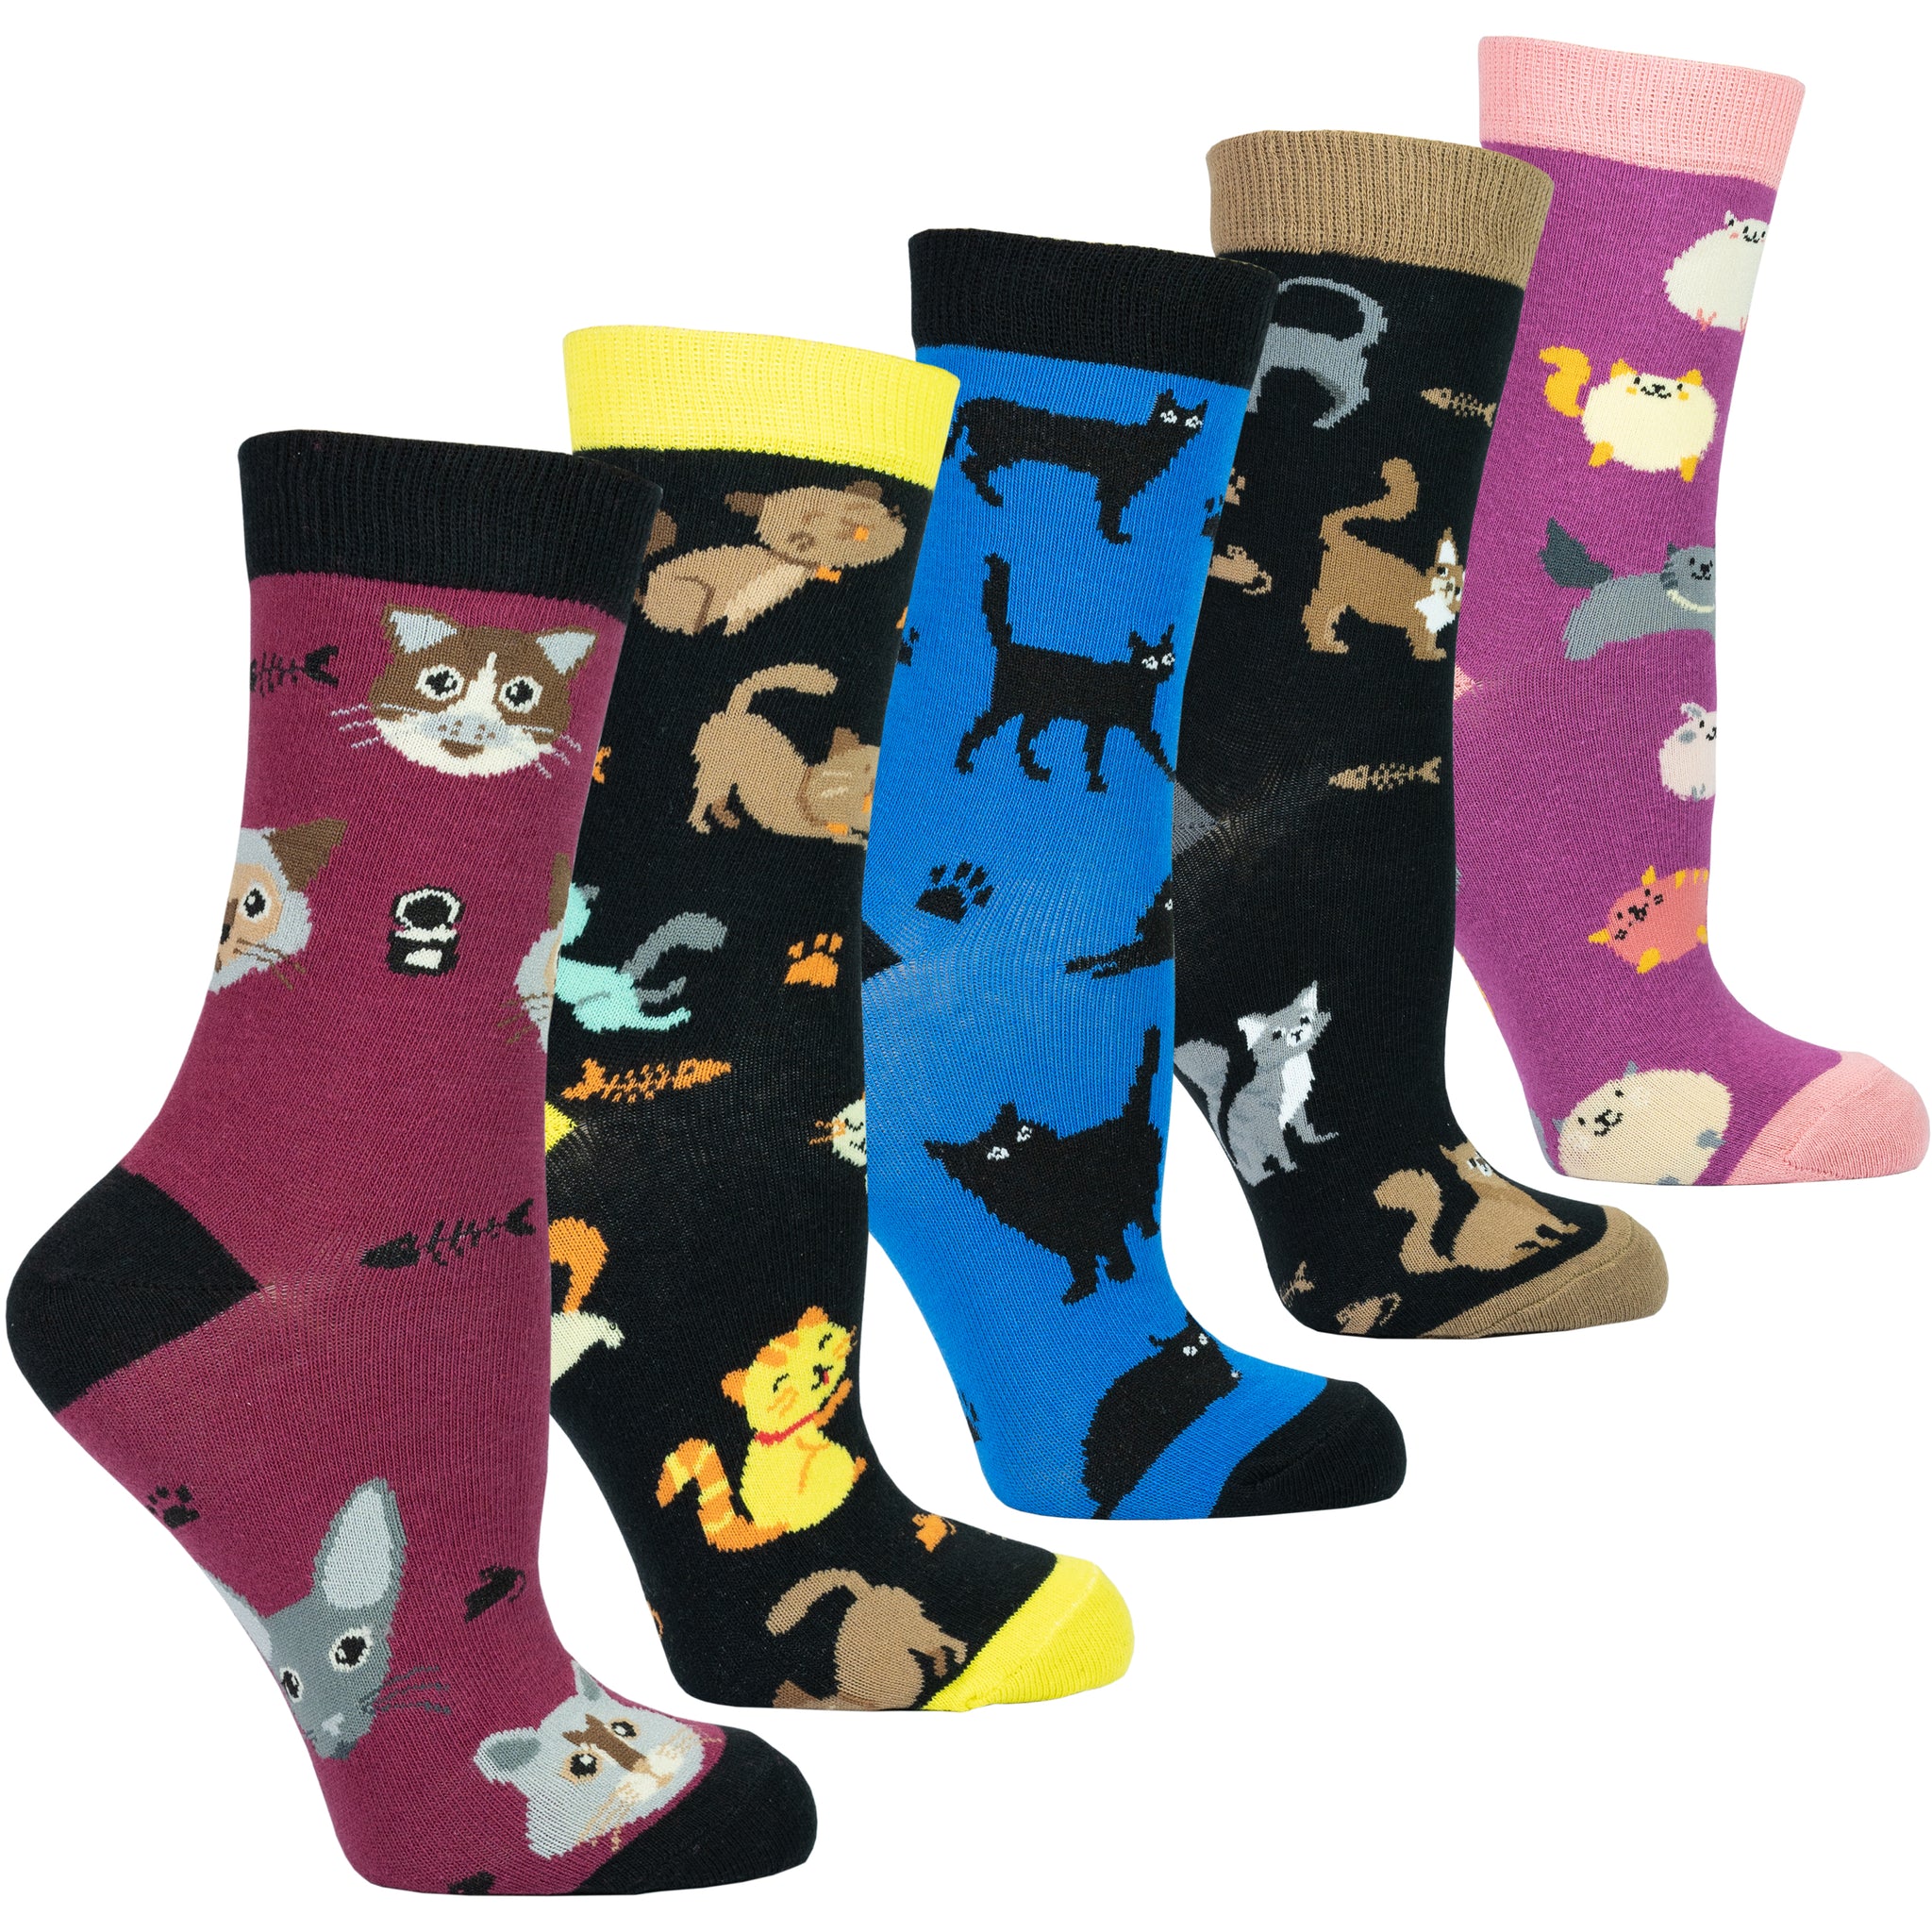 Women's Cute Cats Socks Set